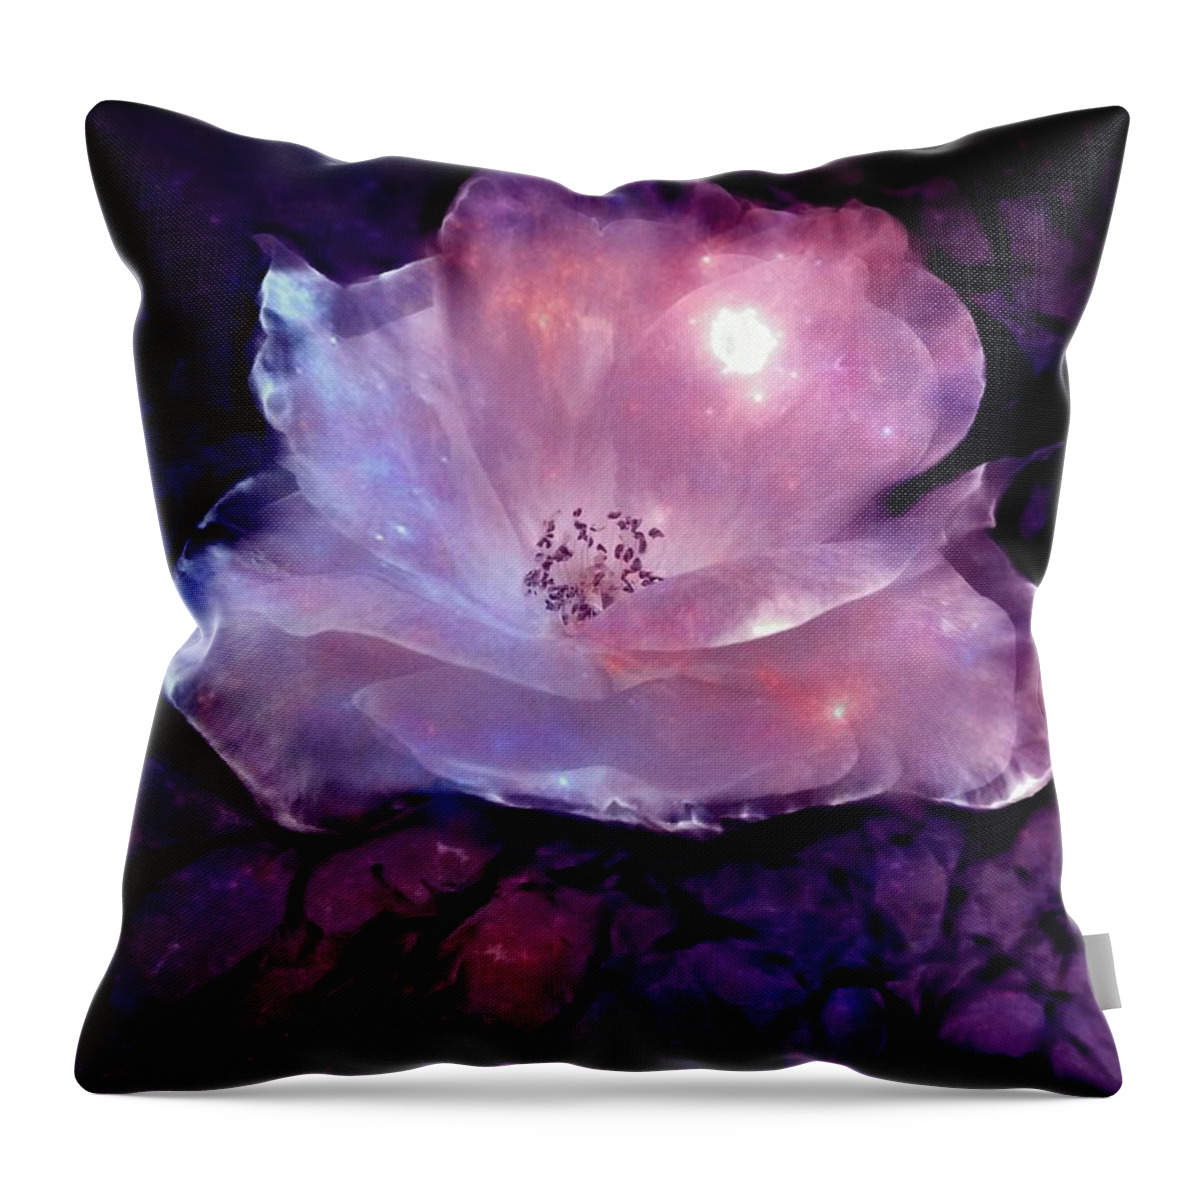 Rose Throw Pillow featuring the digital art Frozen Rose by Lilia D